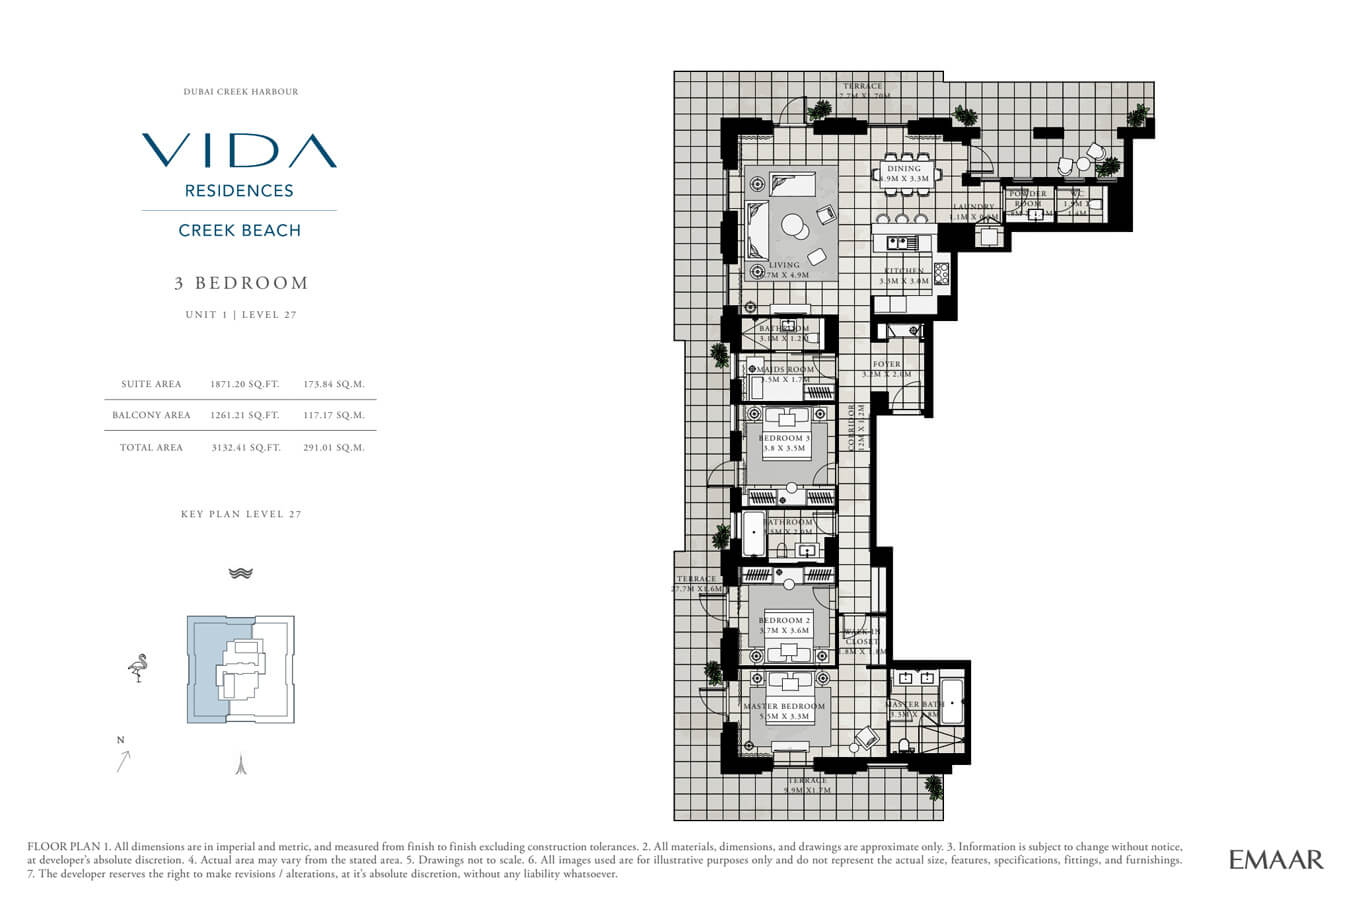 Vida-Residences-Dubai-Creek-Harbour-3-Bedroom-Floor-Plan